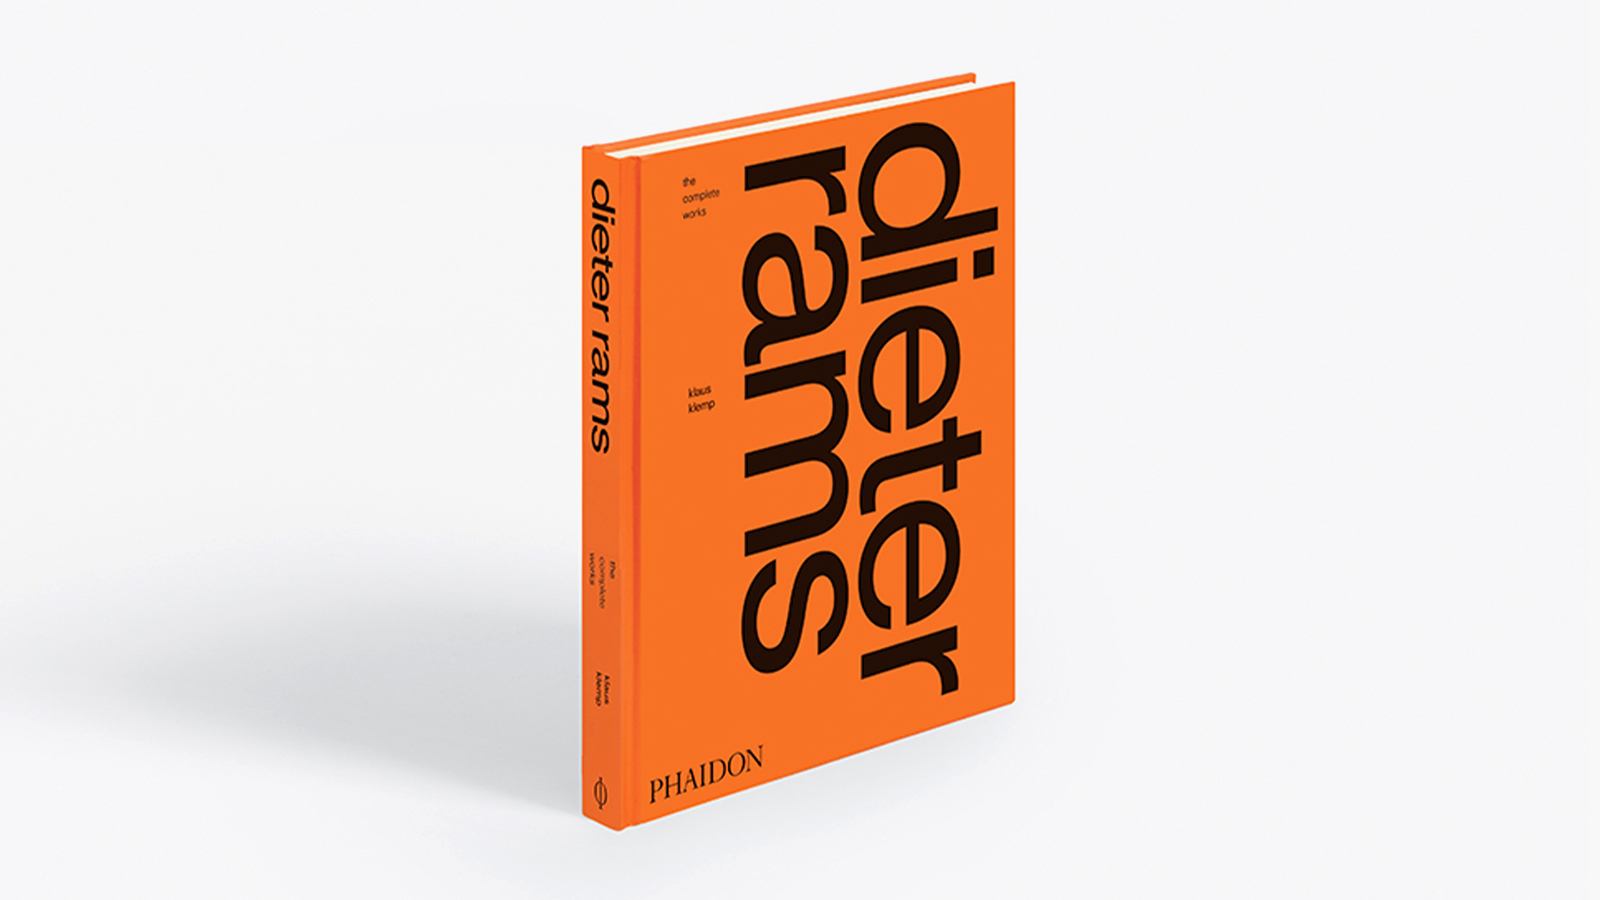 ‘Dieter Rams: The Complete Works’ by Klaus Klemp